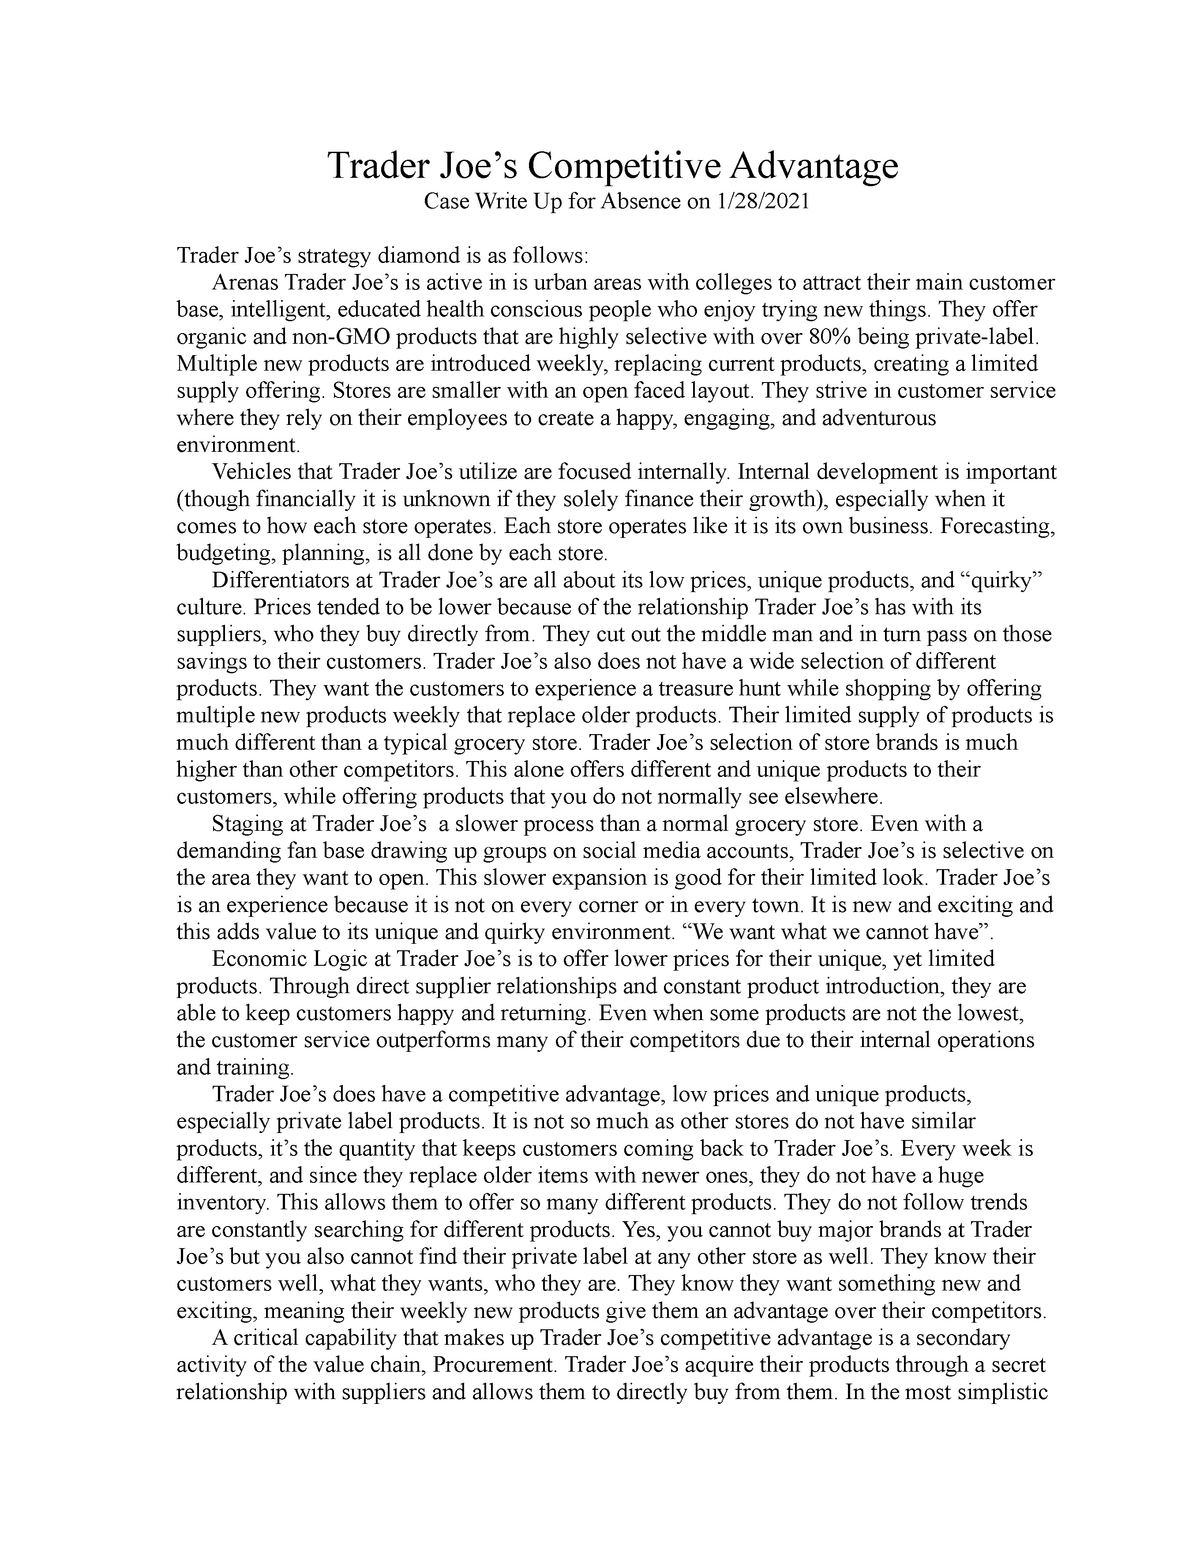 trader joe's harvard case study pdf